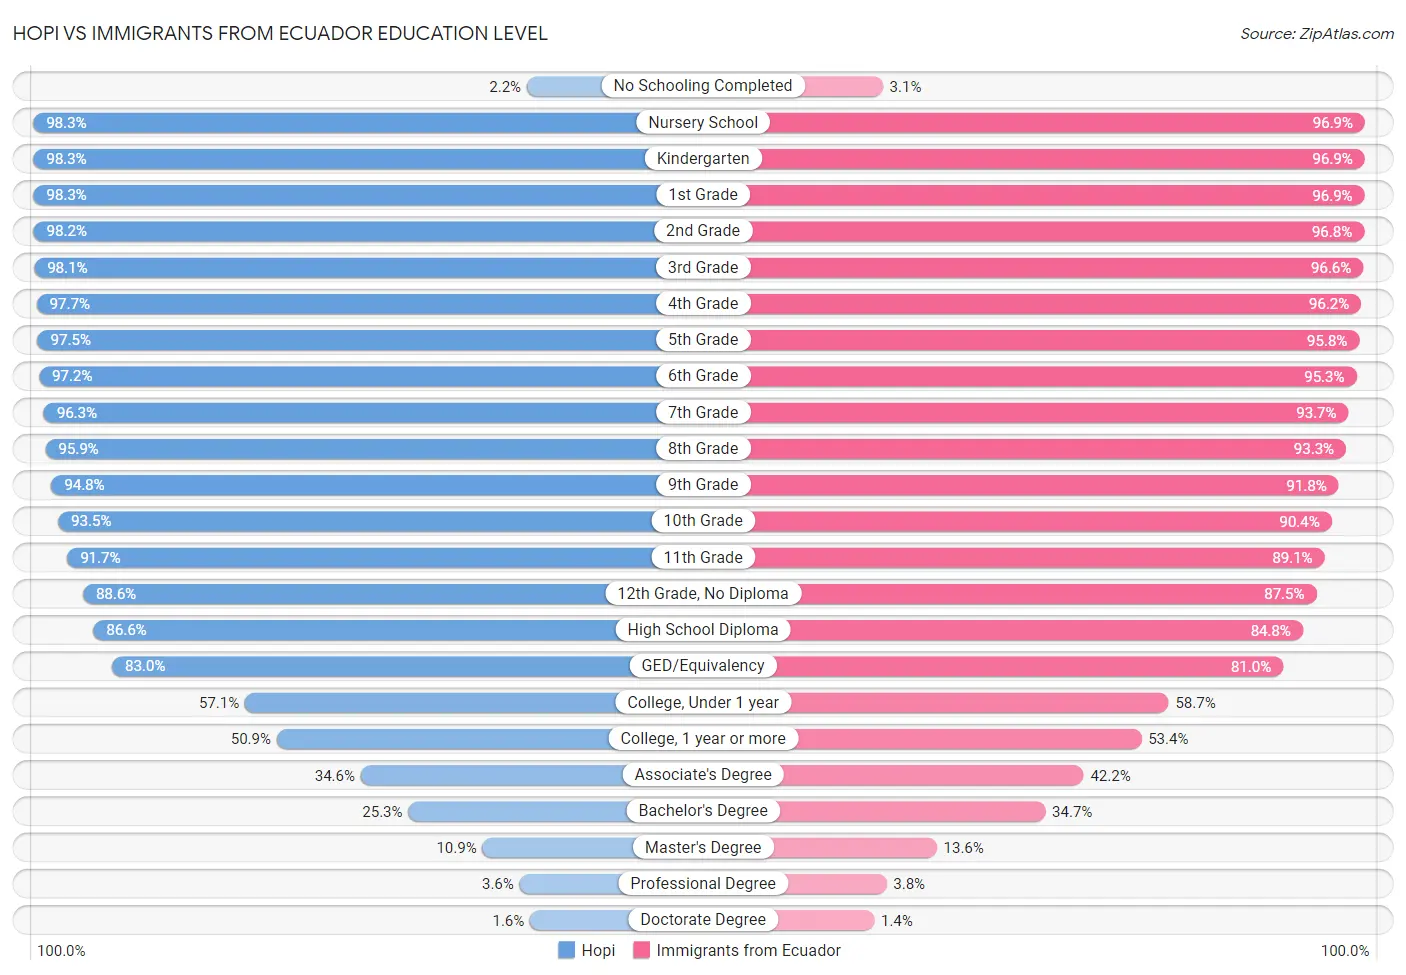 Hopi vs Immigrants from Ecuador Education Level